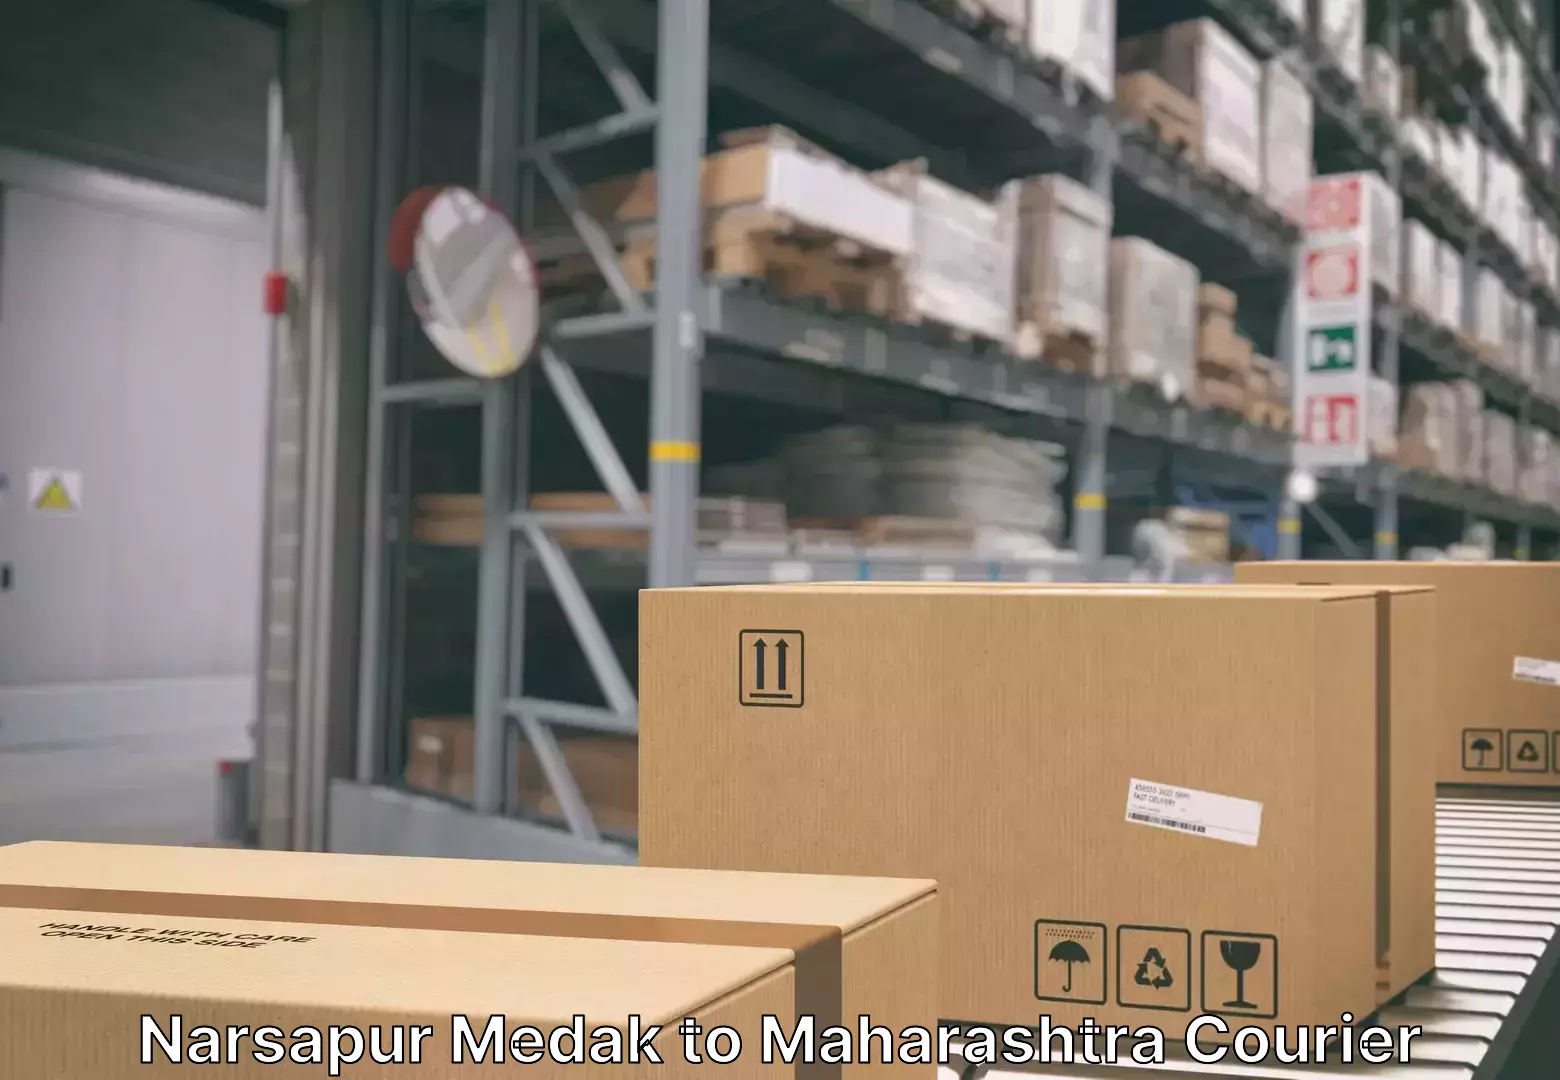 Professional movers and packers Narsapur Medak to Maharashtra